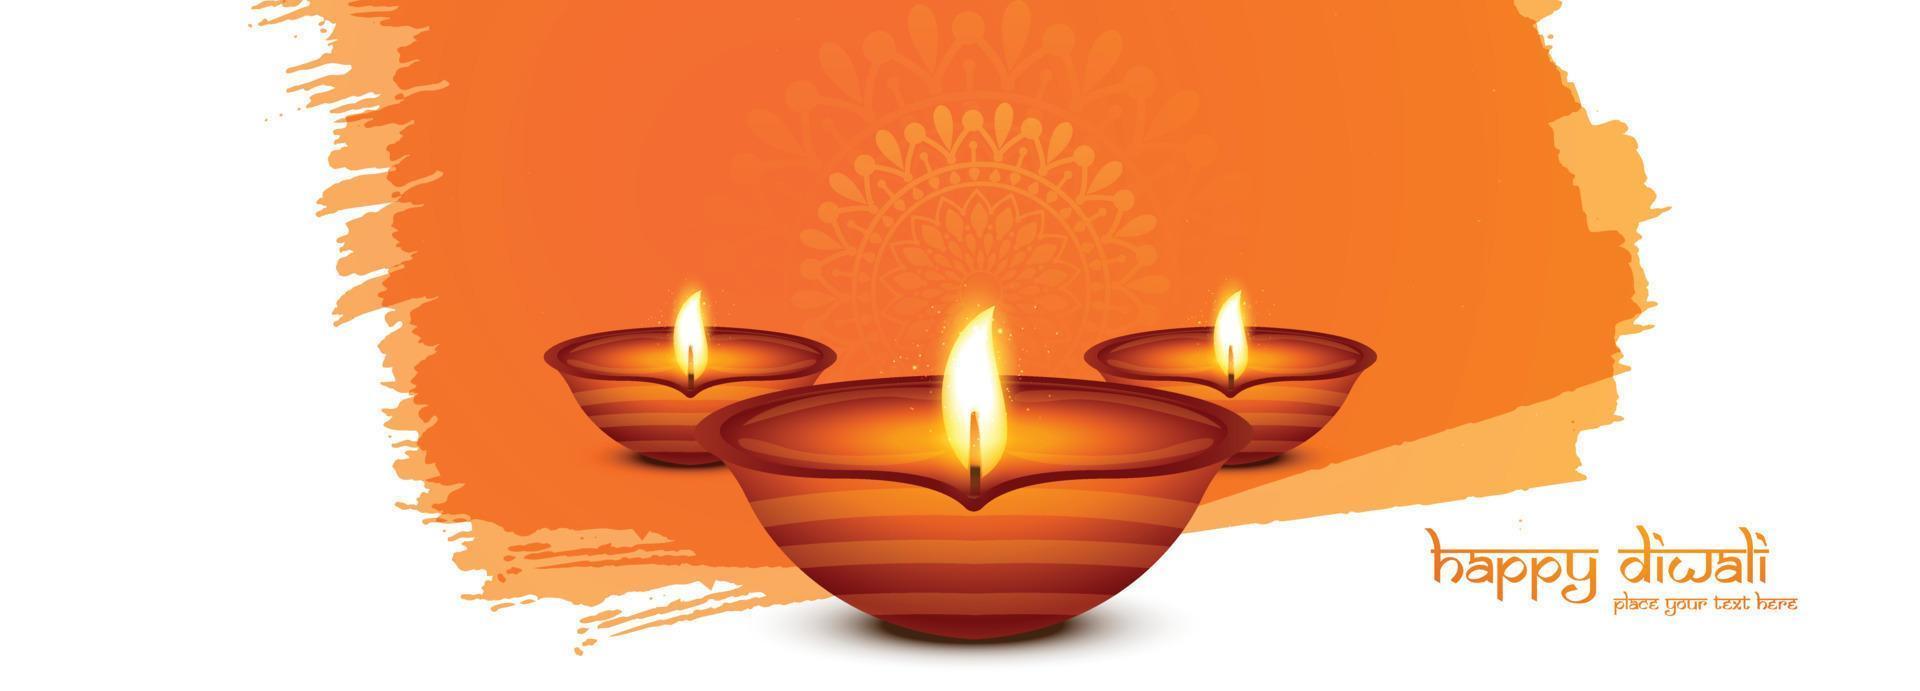 feliz diwali diya lâmpada de óleo festival hindu fundo de banner de celebração vetor